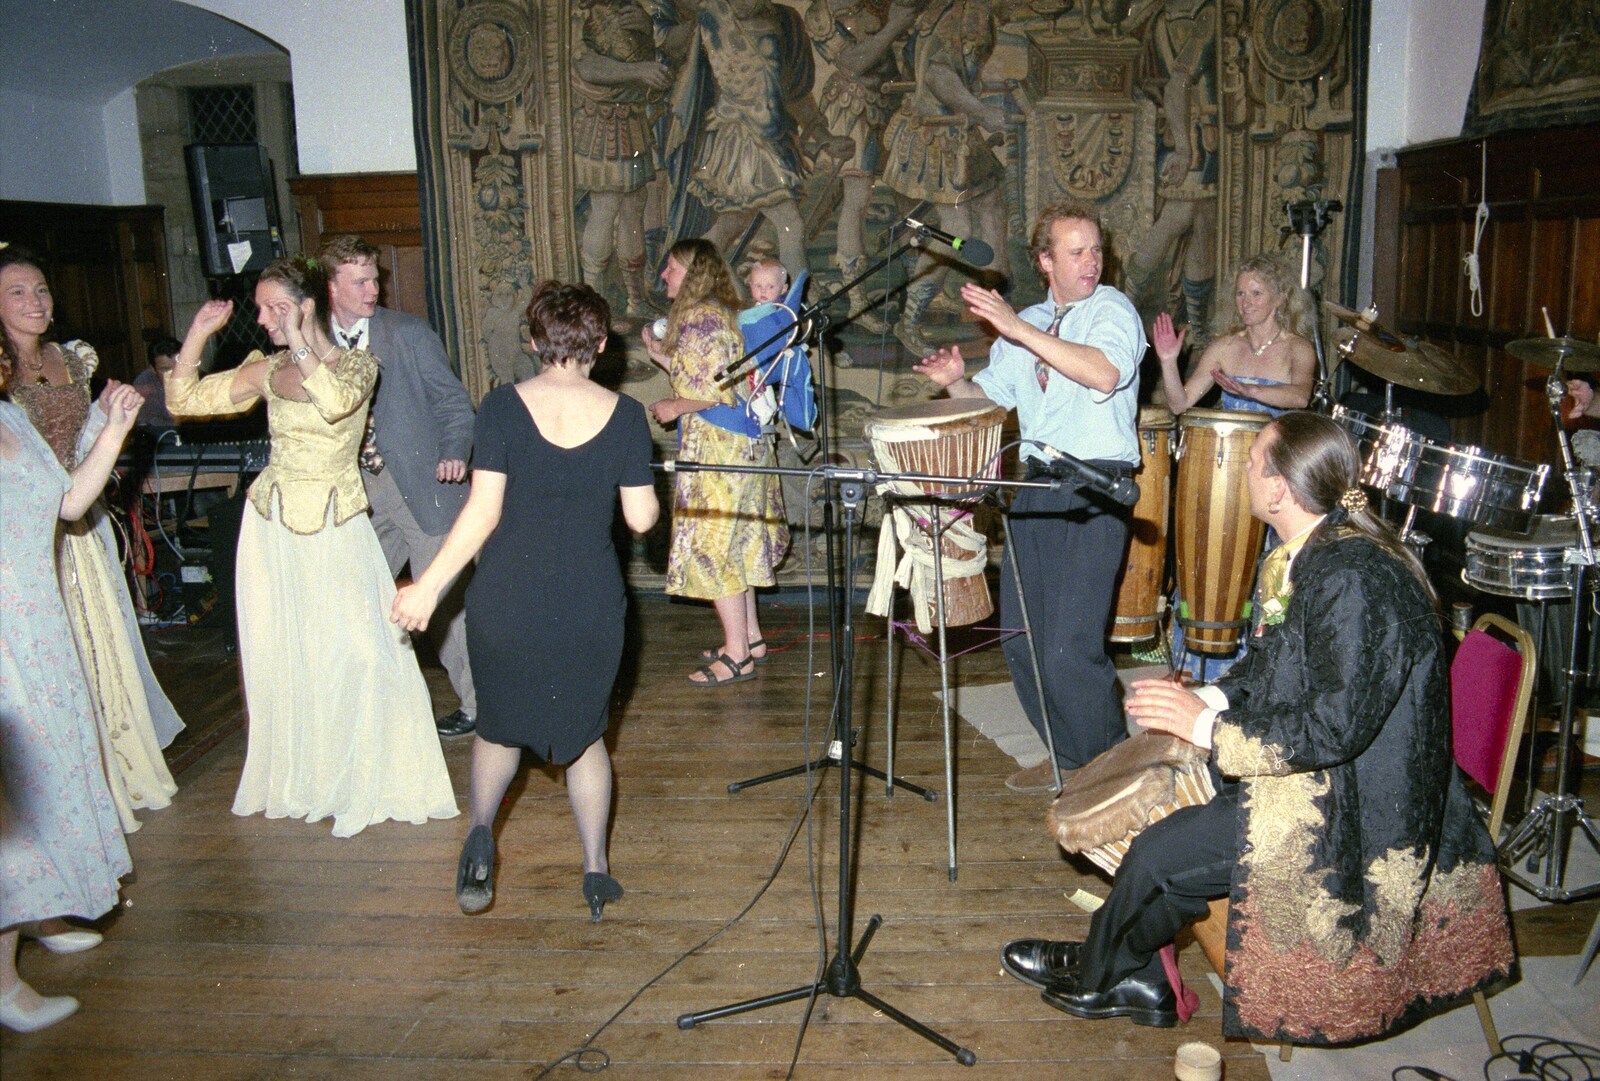 Stuart and Sarah's CISU Wedding, Naworth Castle, Brampton, Cumbria - 21st September 1996: Wedding dancing